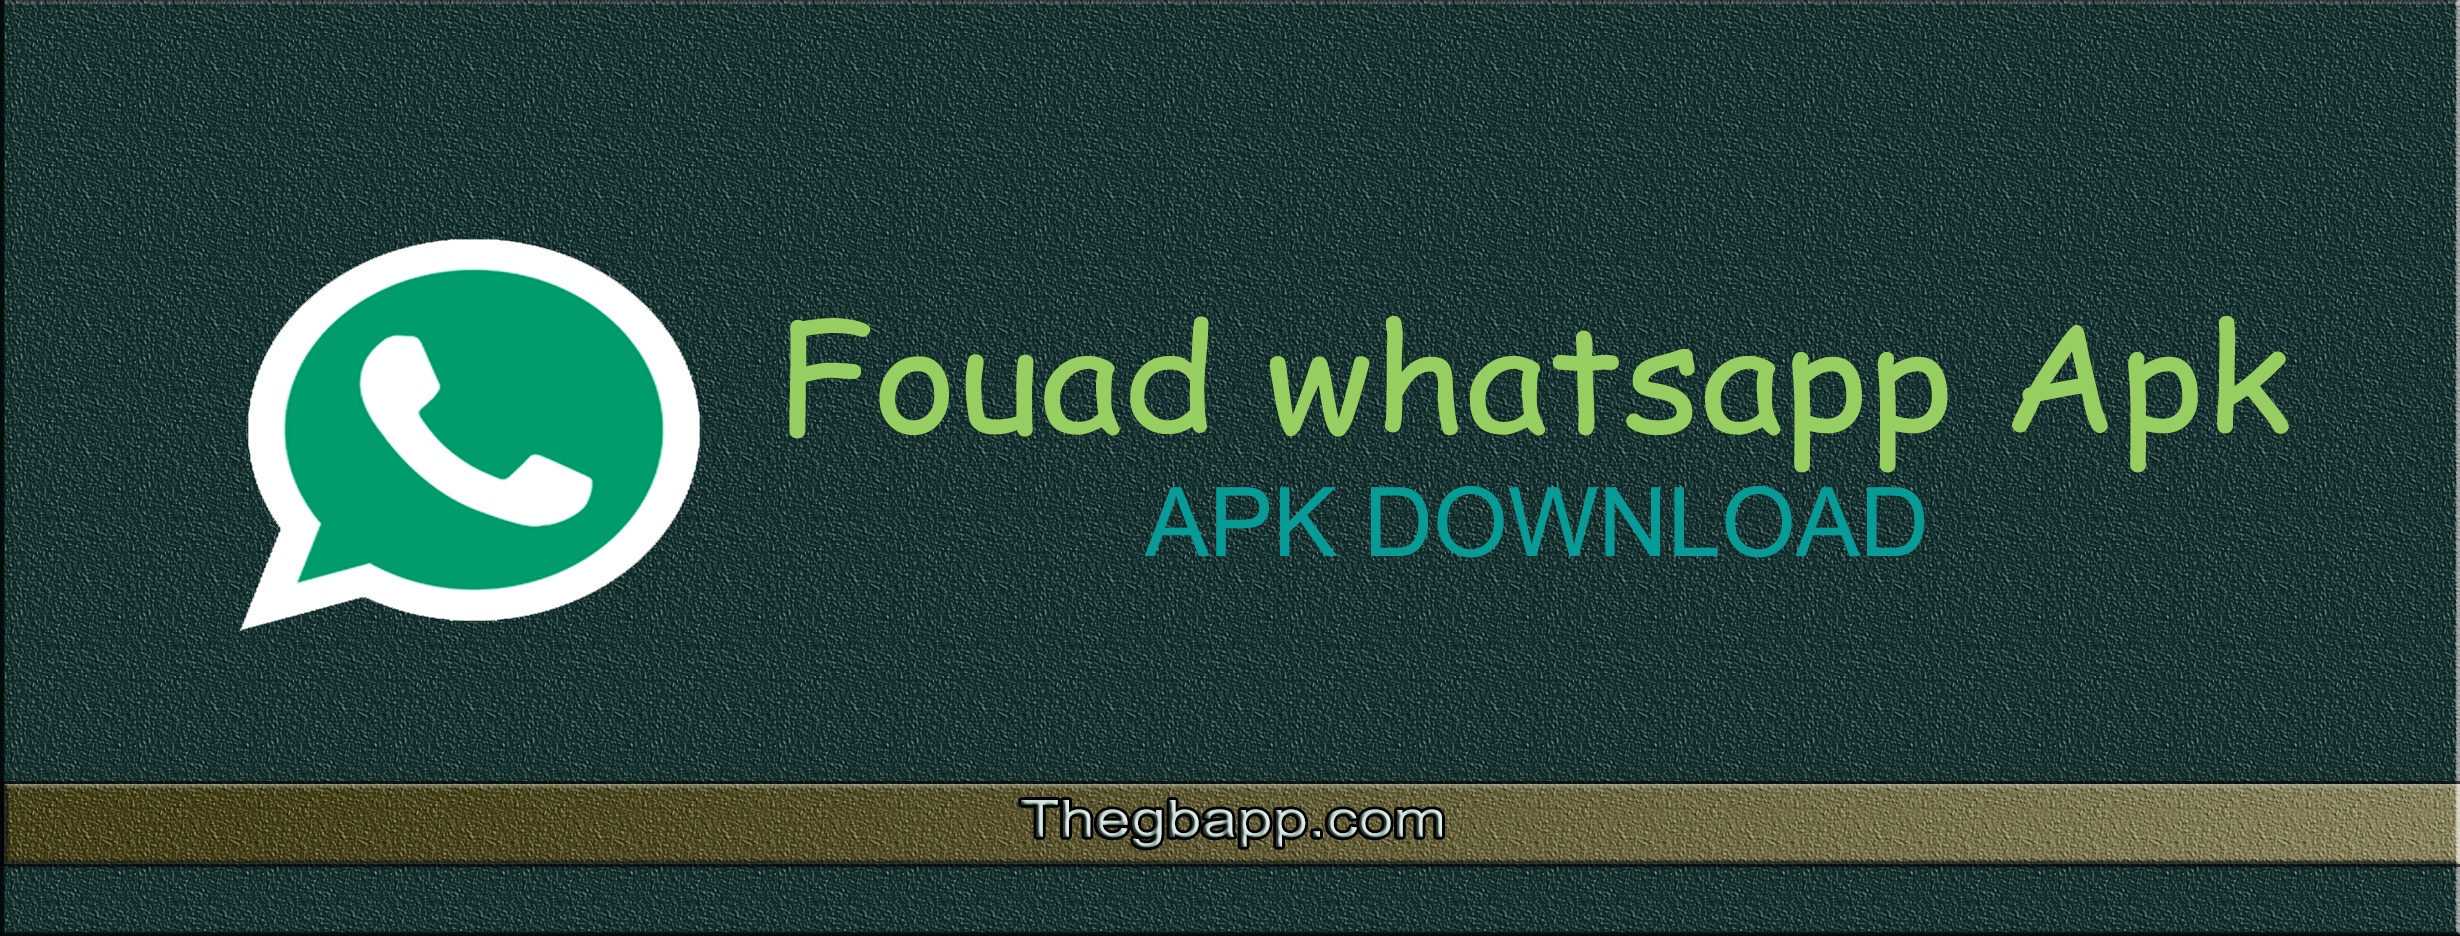 fouad whatsapp latest version apk download 2021 apkpure